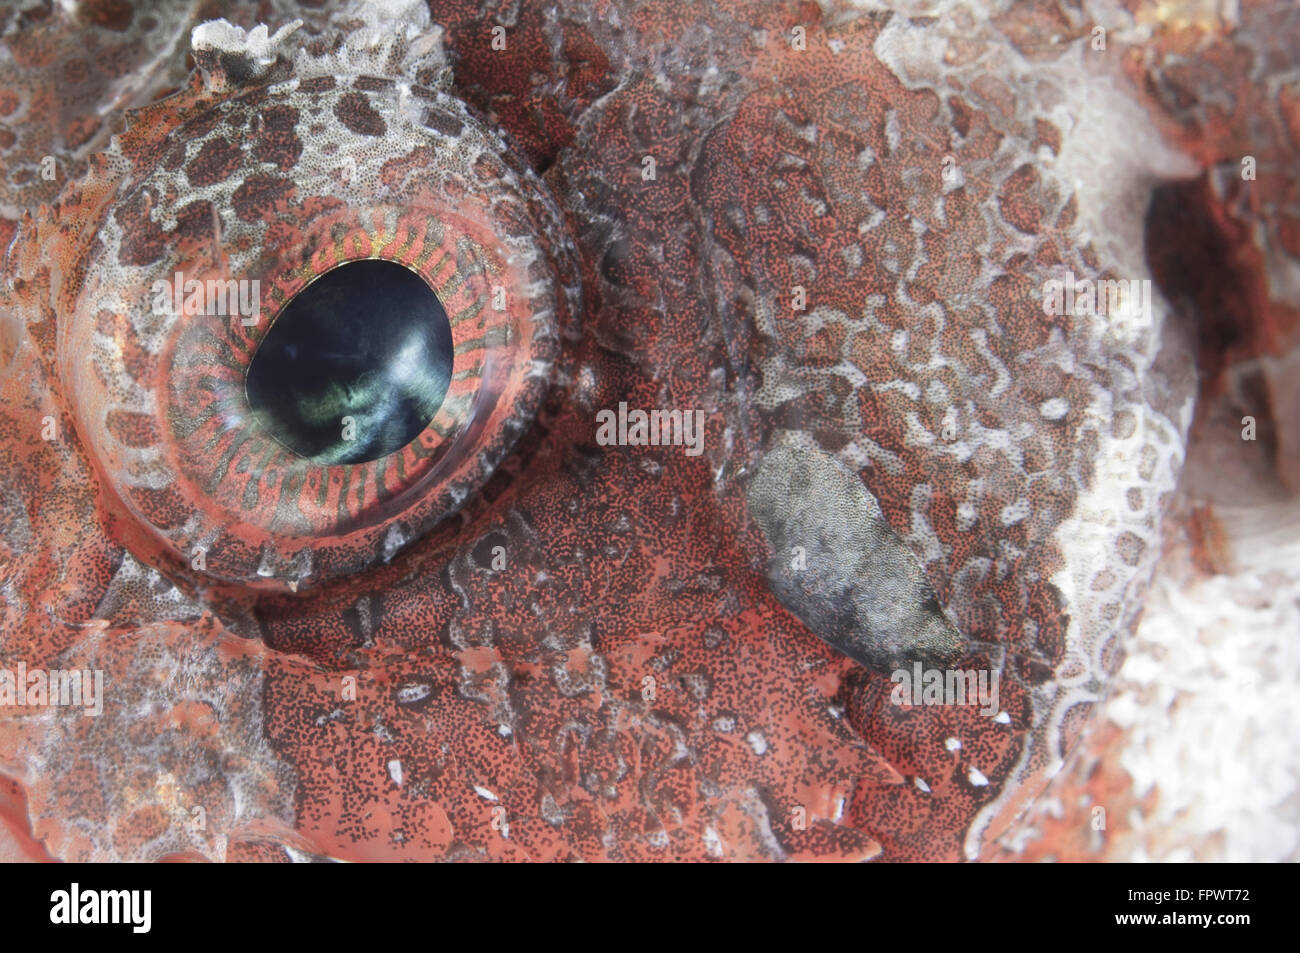 Close-up view of the eye of a tassled scorpionfish (Scorpaenopis oxycephala), Komodo National Park, Indonesia. Stock Photo